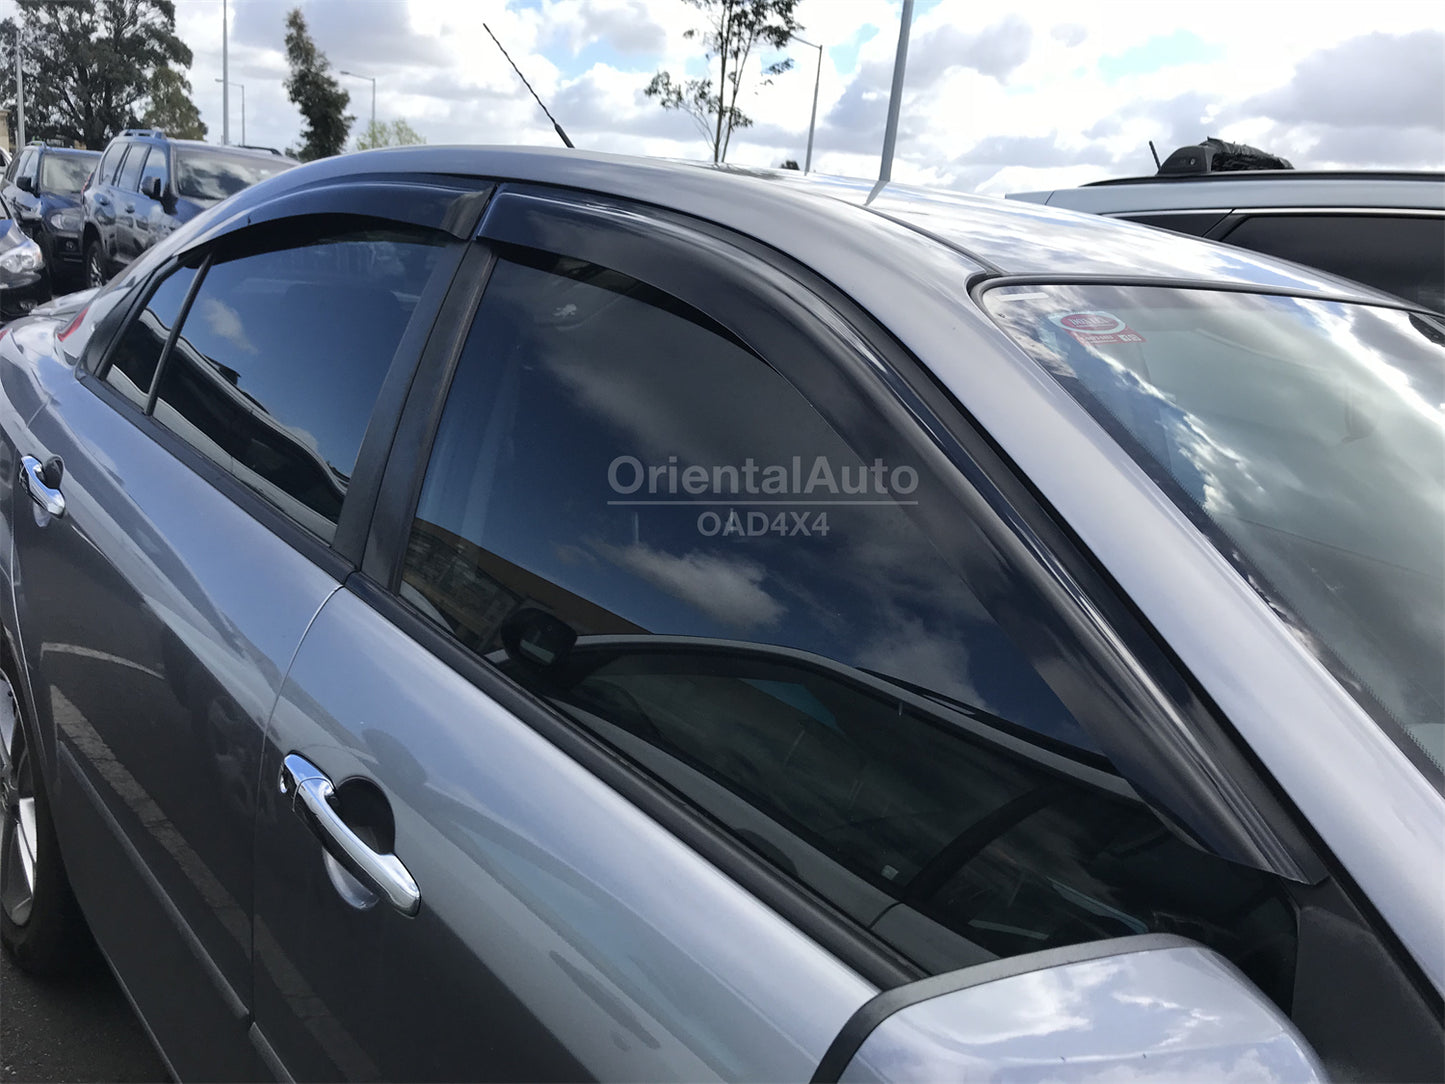 OAD Premium Weathershields For Mazda 6 GG Liftback 2002-2007 Weather Shields Window Visor